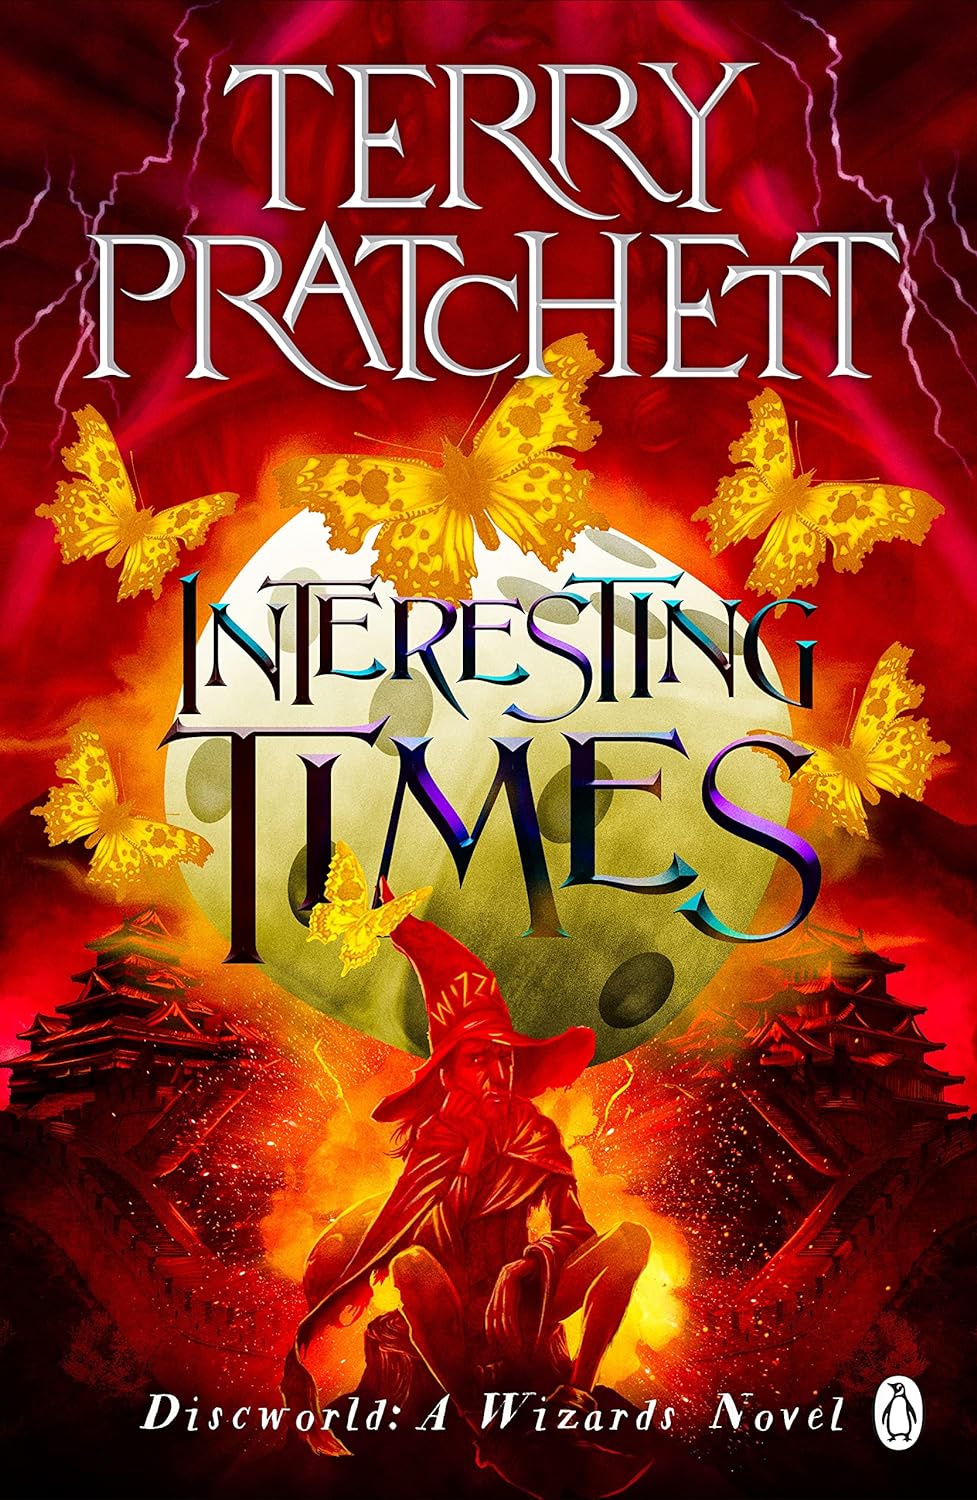 Terry Pratchett: Interesting Times (EBook, 2010, Transworld Digital)